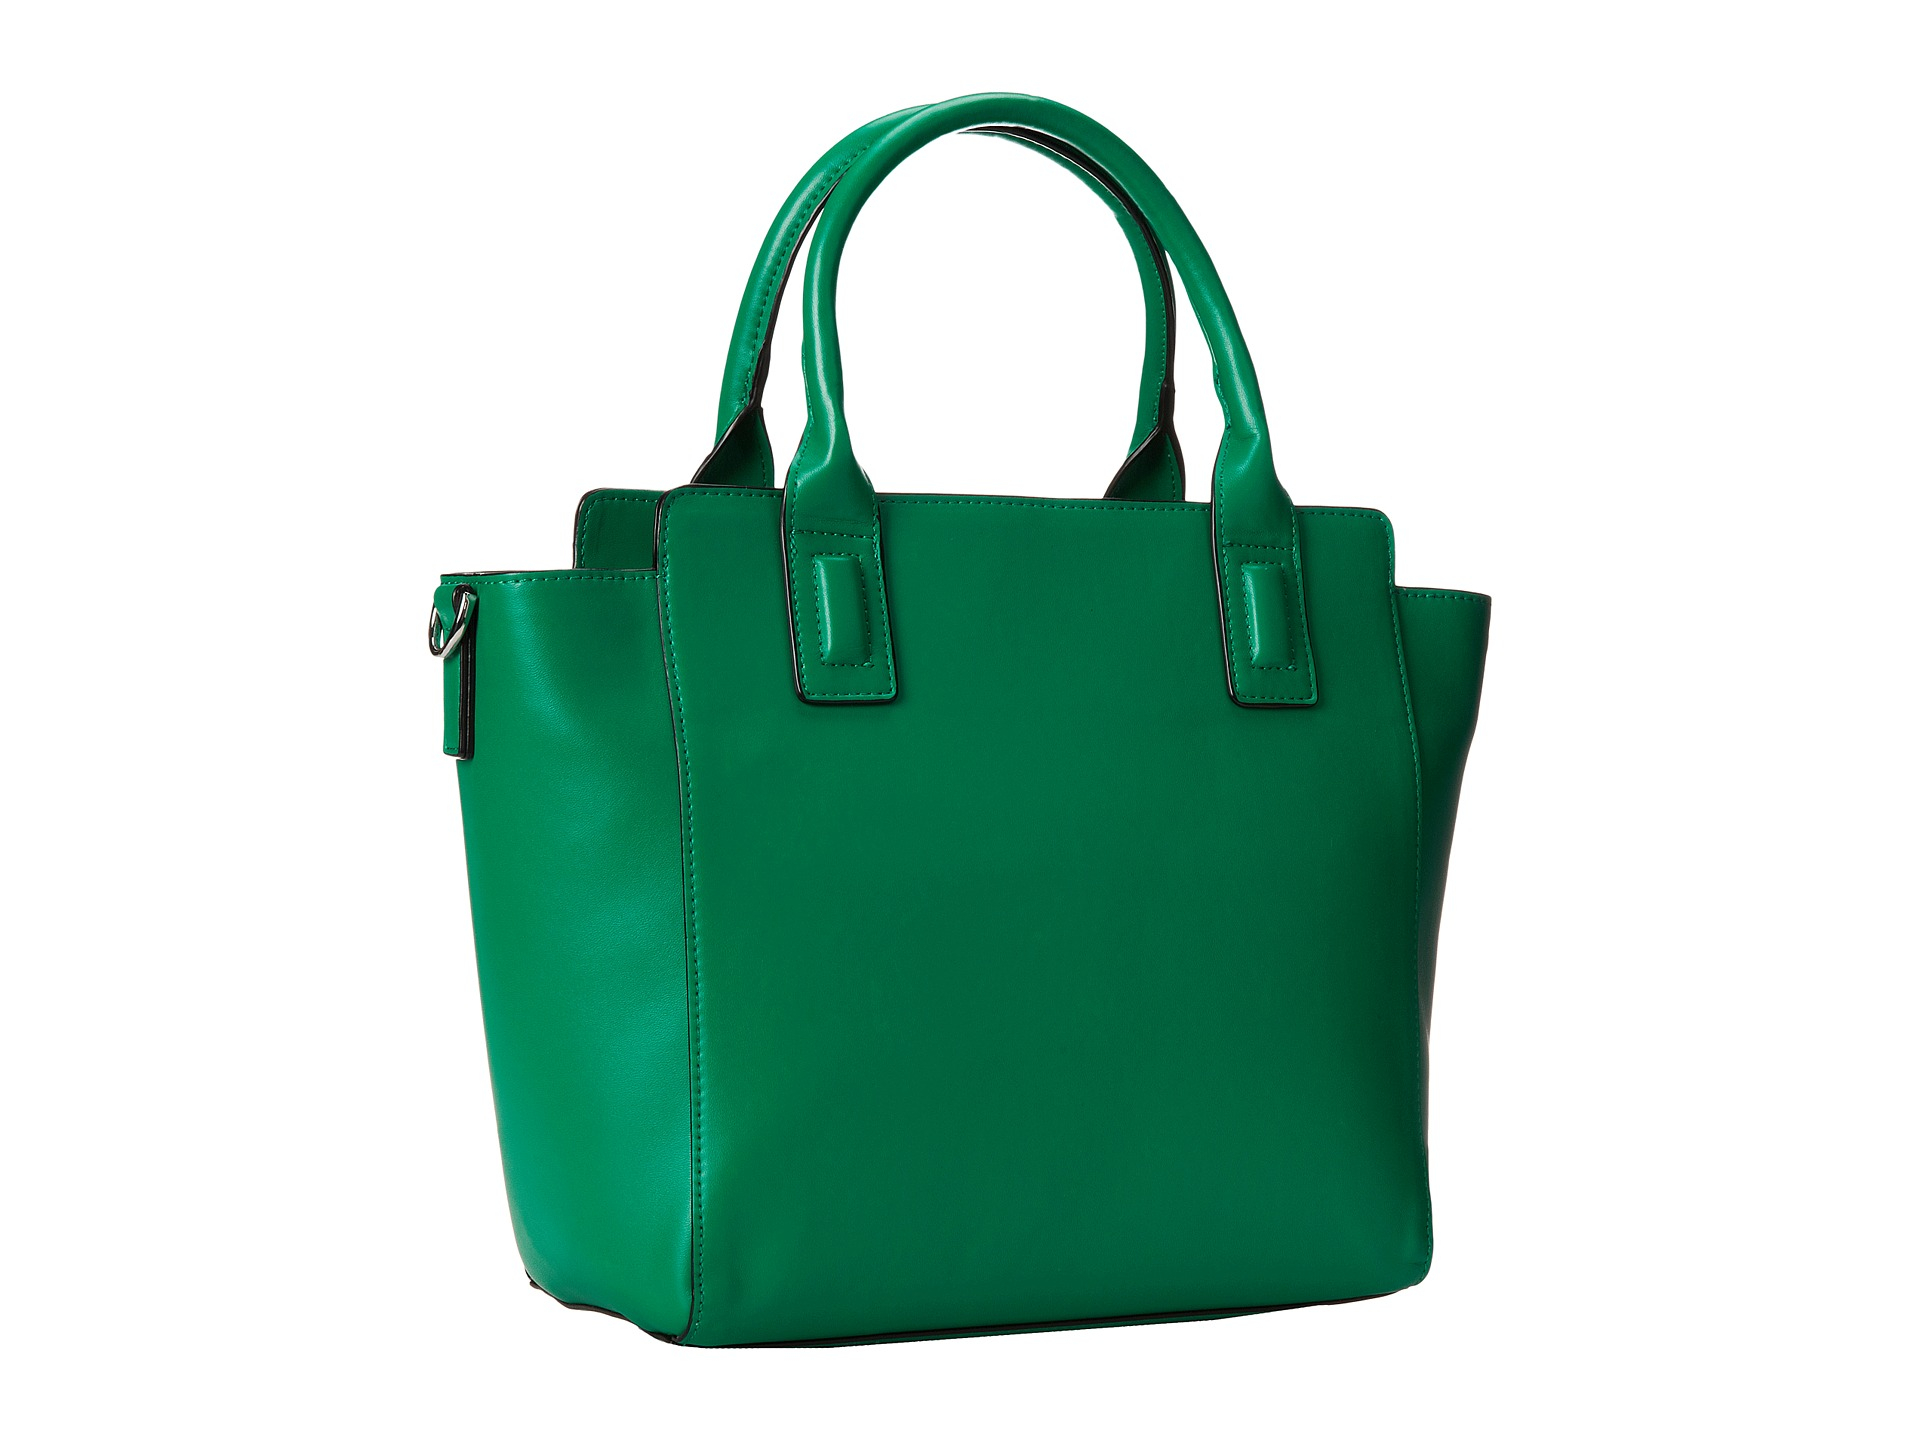 Vera Bradley Solid Pu Handbag in Green (Emerald Green)